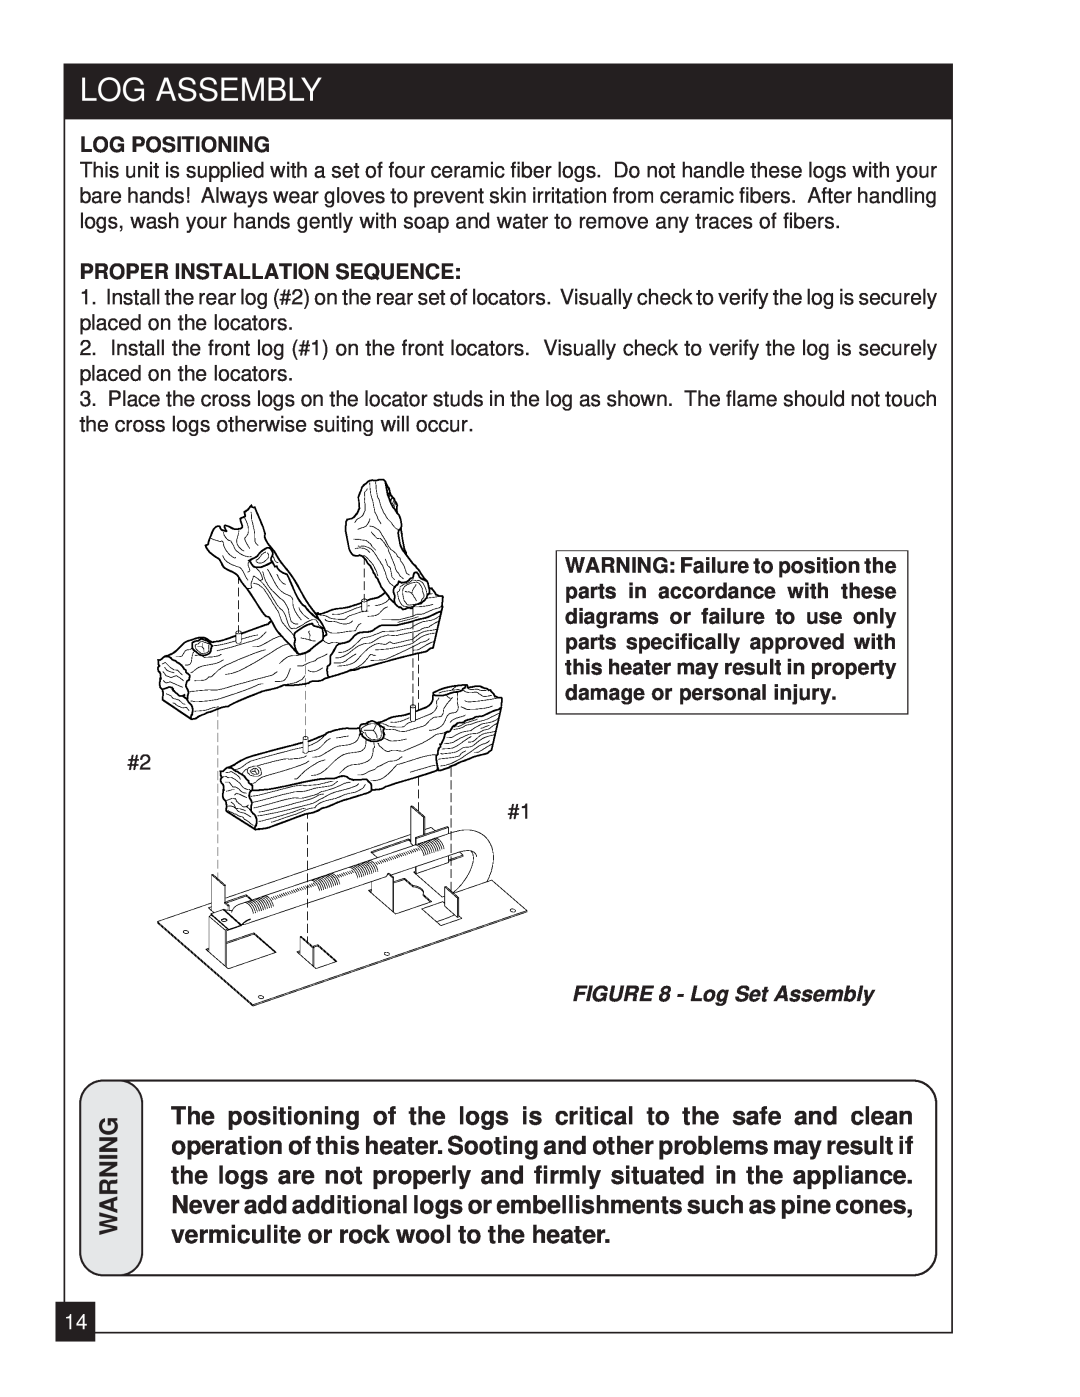 United States Stove 2020L installation manual Log Assembly, Log Positioning, Proper Installation Sequence, Log Set Assembly 